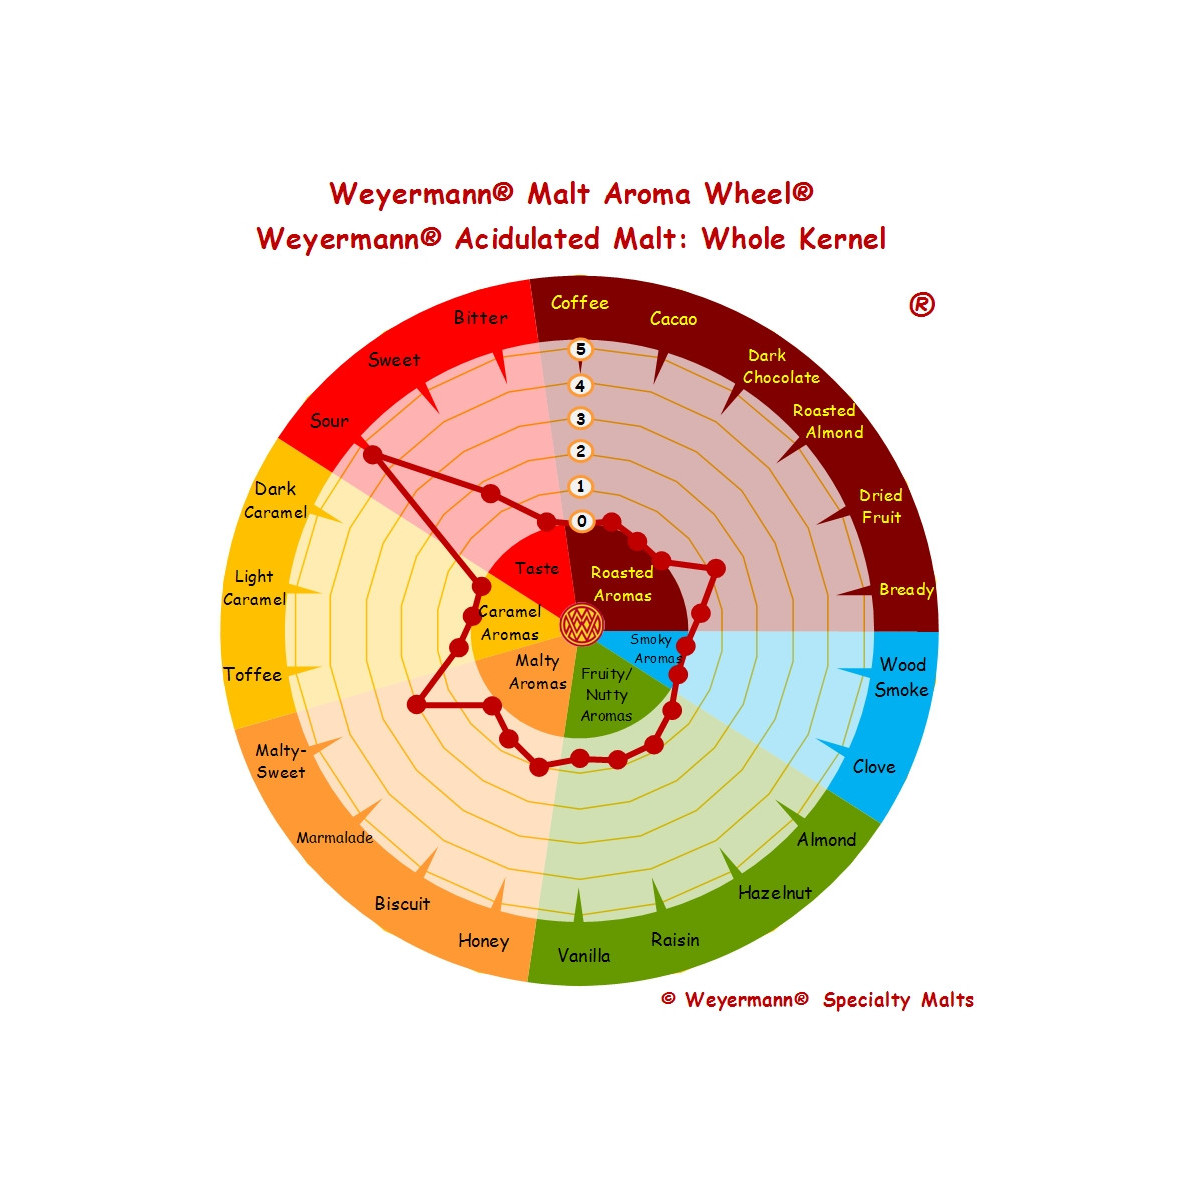 Weyermann® Acidulated malt (Sauermalz)  1,5-5,1 EBC 5 kg